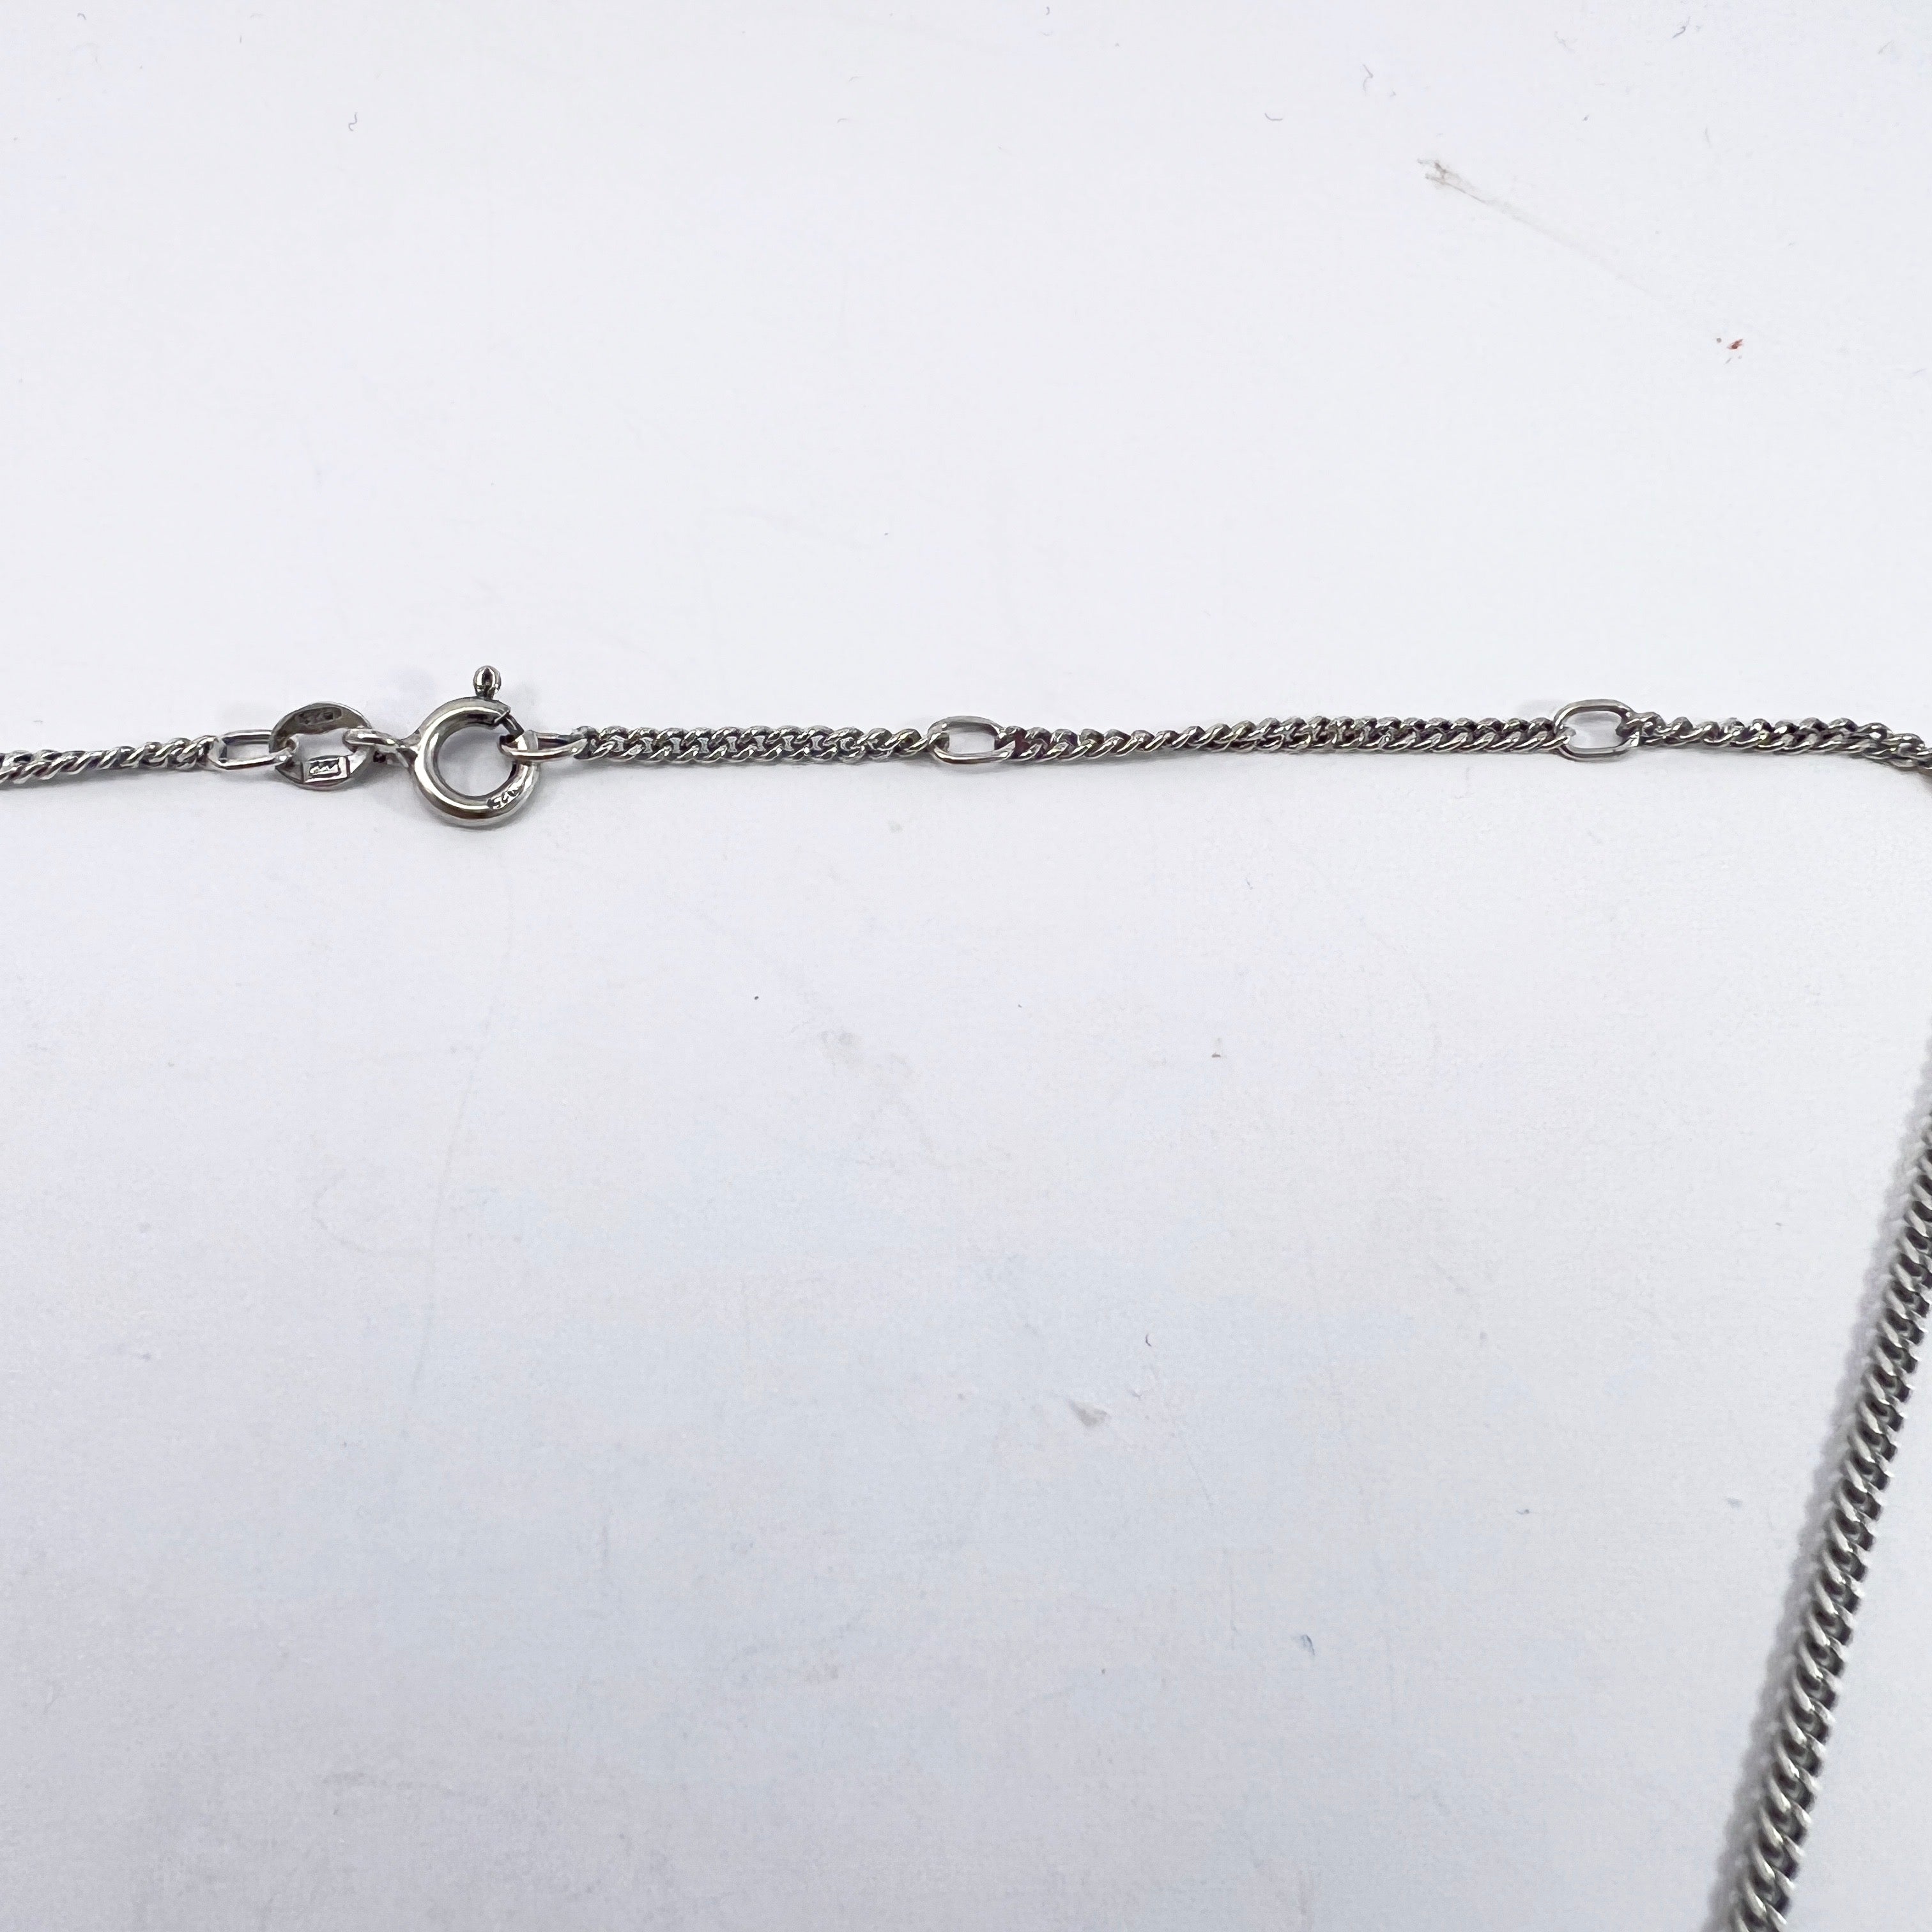 Karl Laine for Finn Feelings, Finland Vintage Sterling Silver Rock Crystal Pendant Necklace.